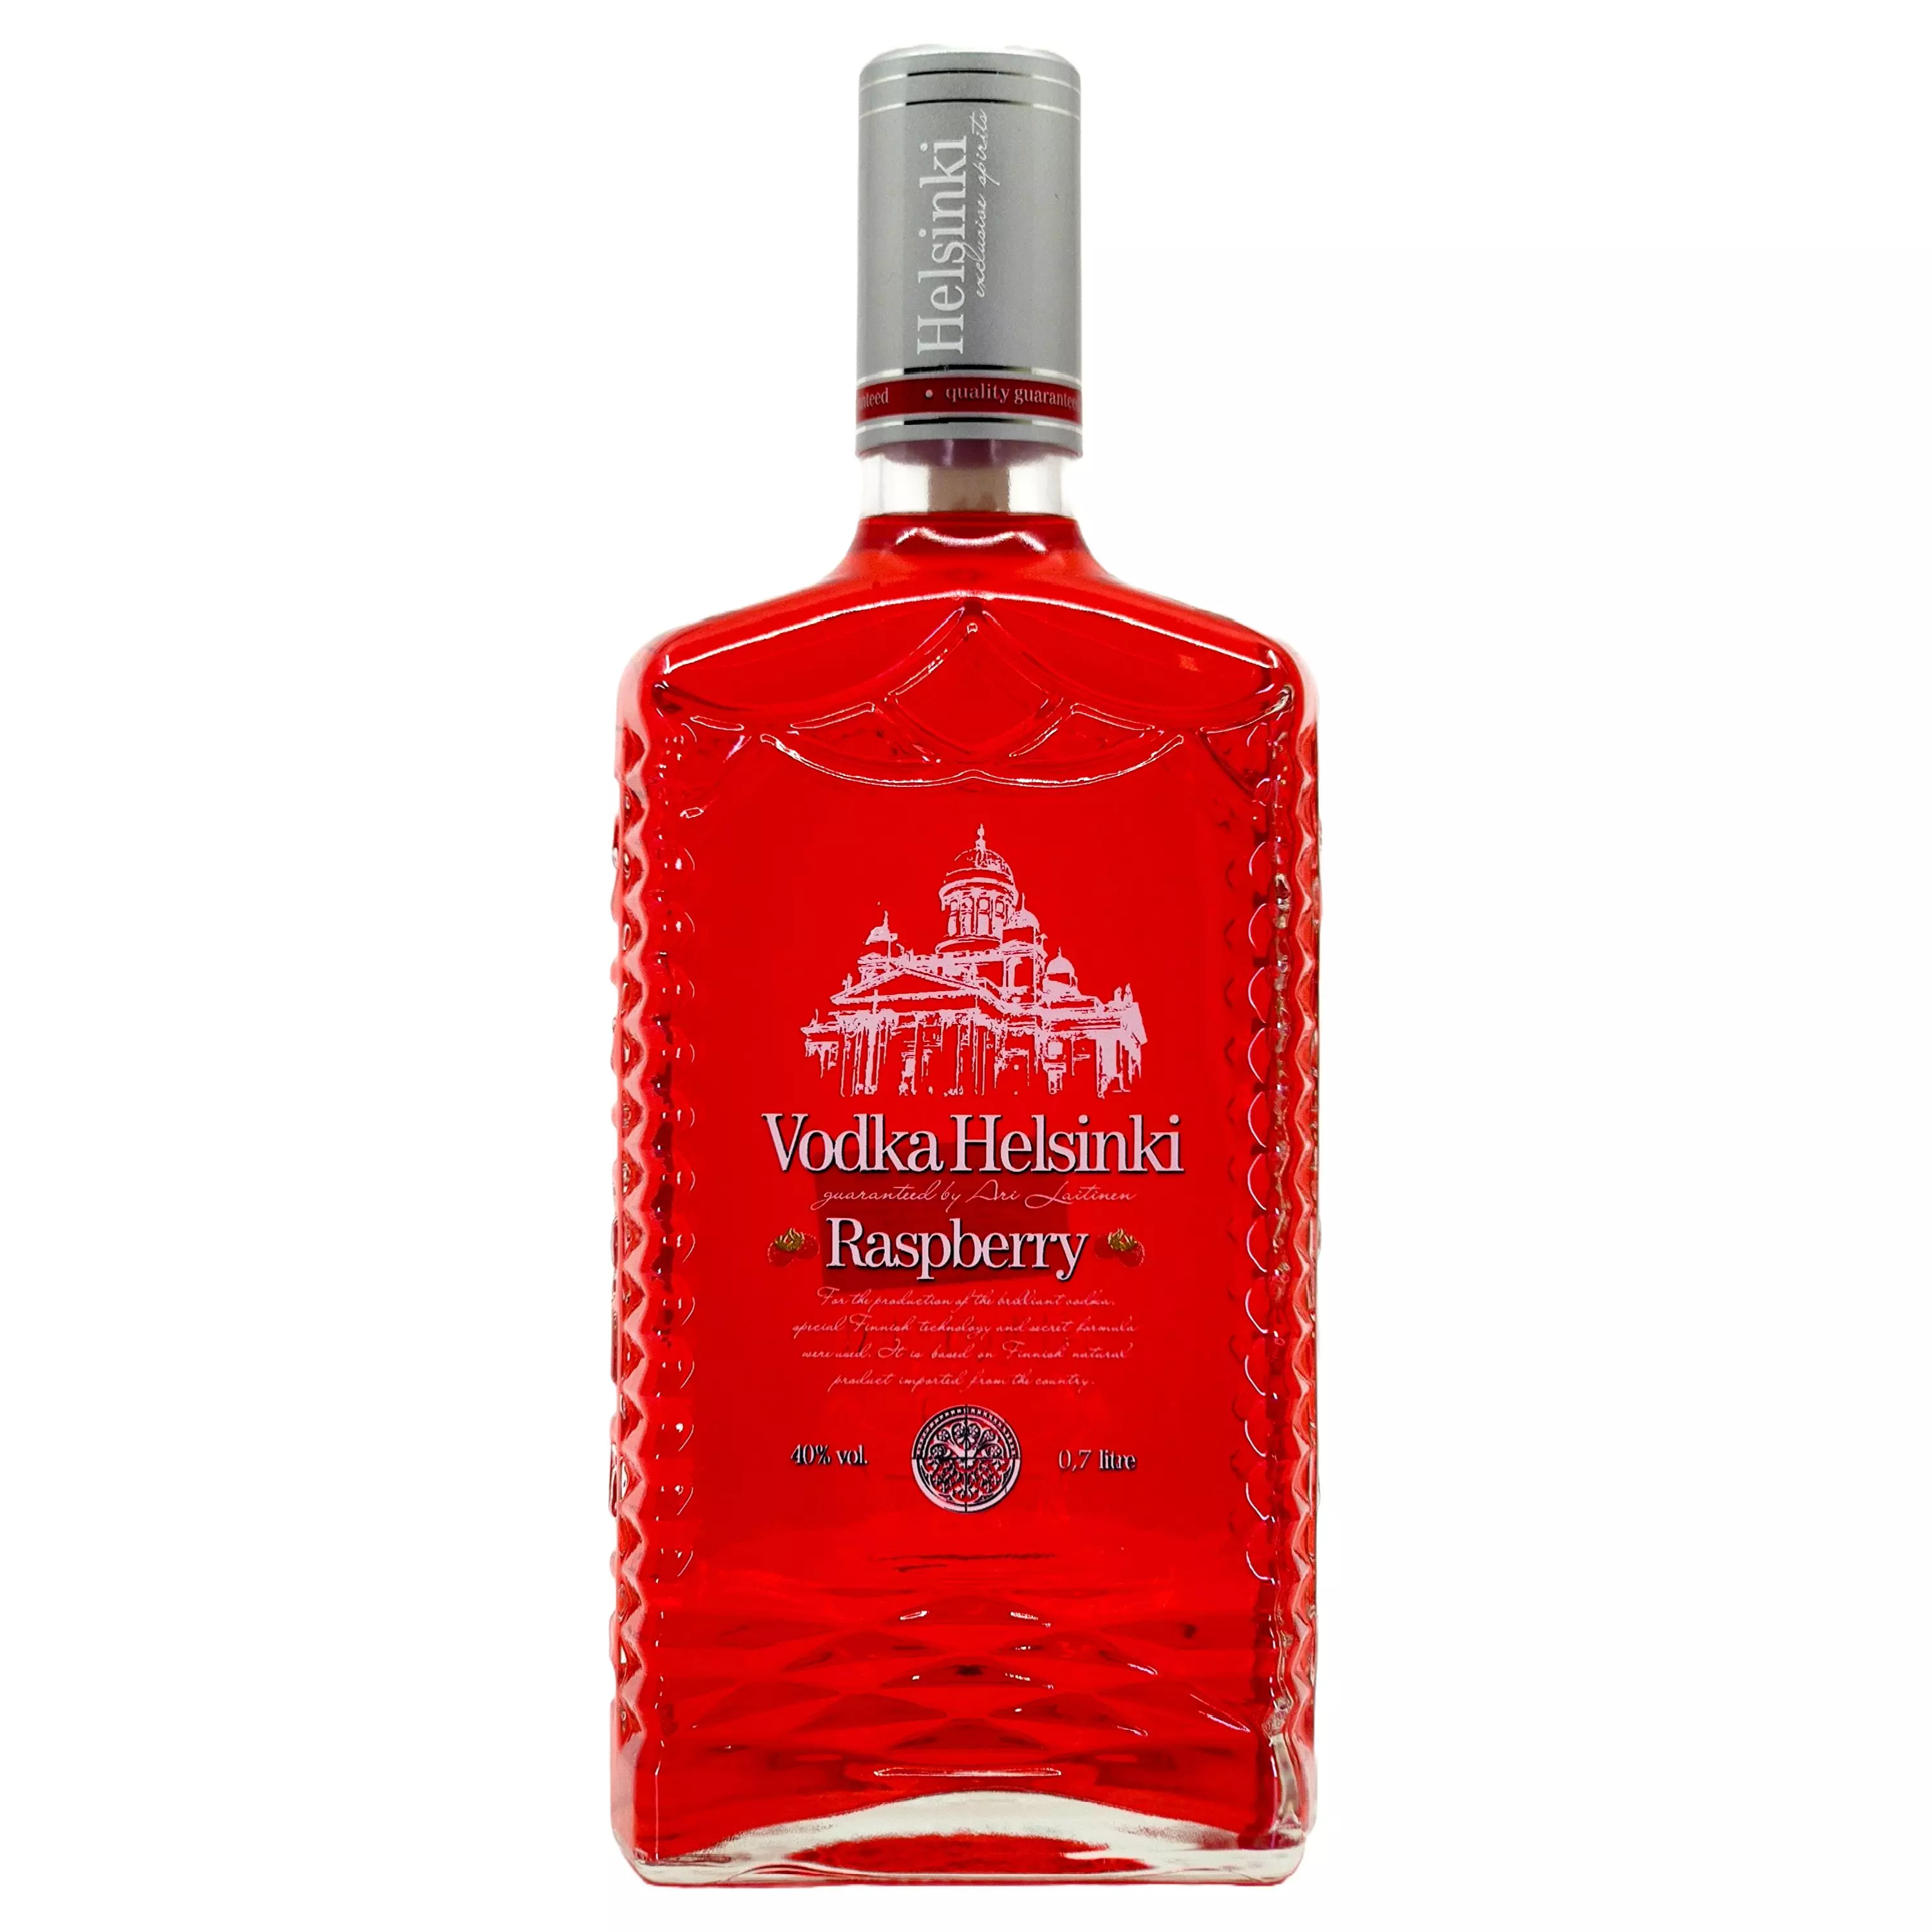 Helsinki raspberry vodka (0,7L / 40%)